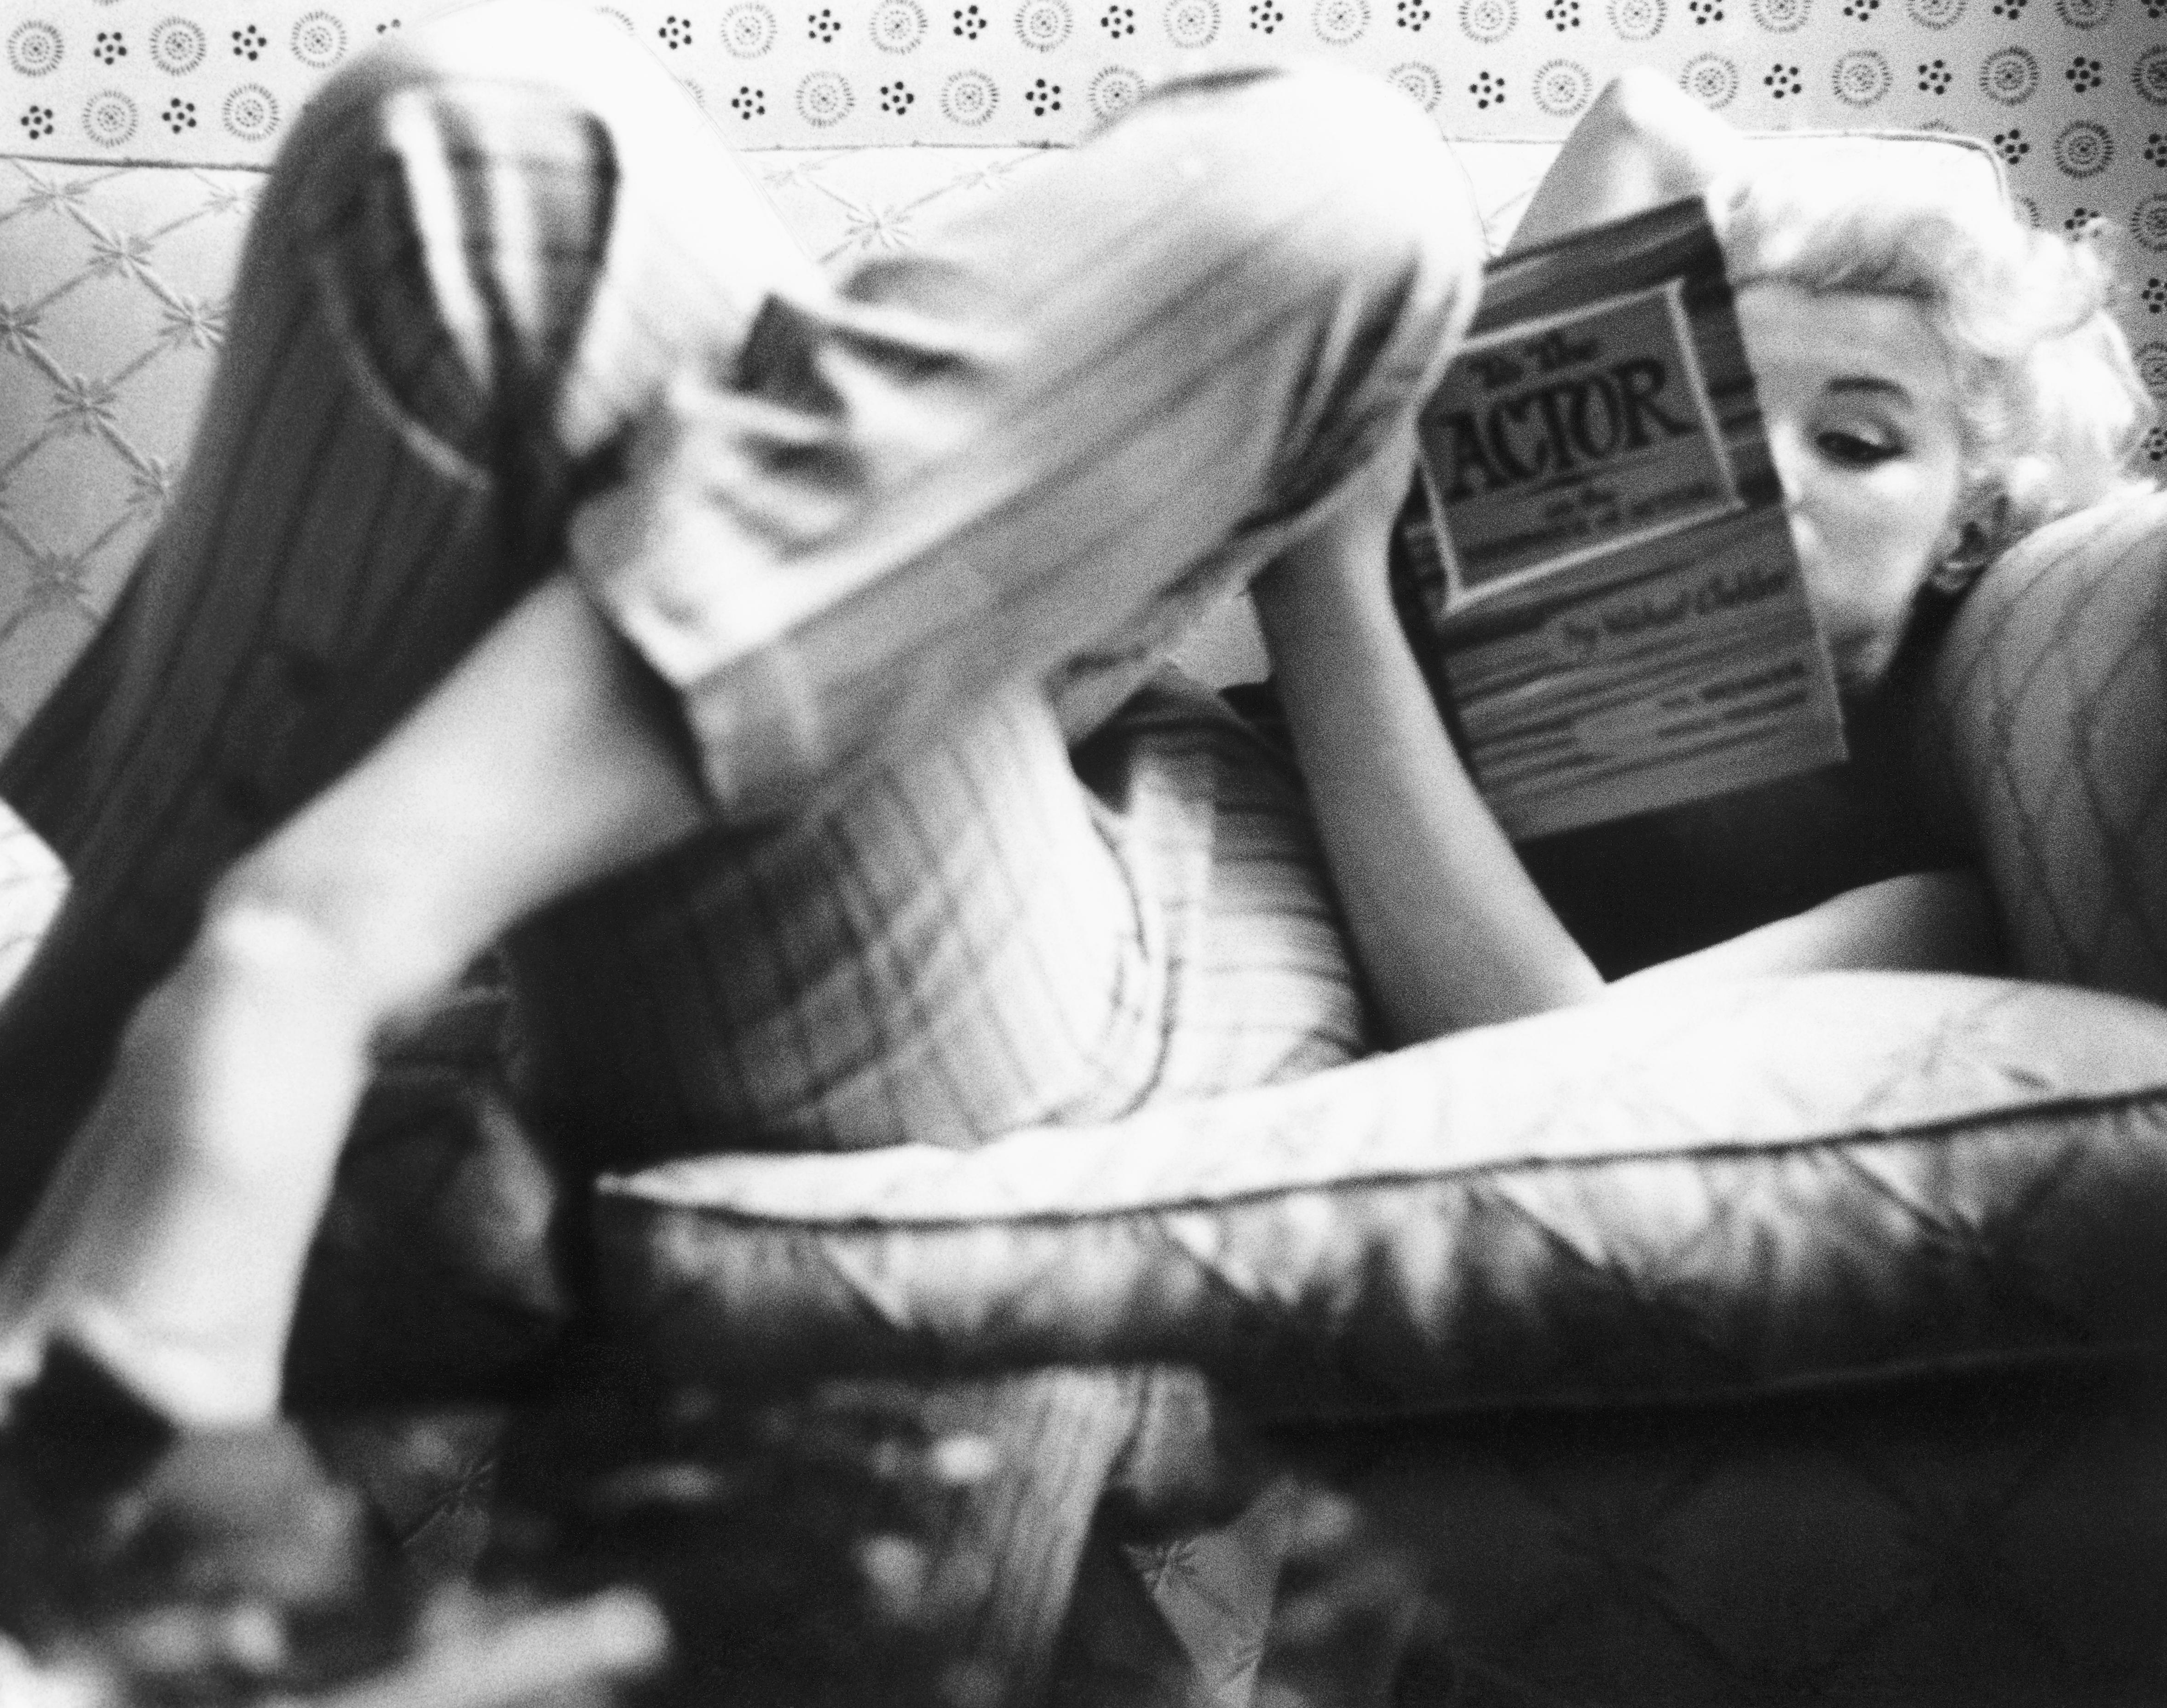 Michael Ochs Portrait Photograph - Marilyn Candid Moment (1955) Silver Gelatin Fibre Print